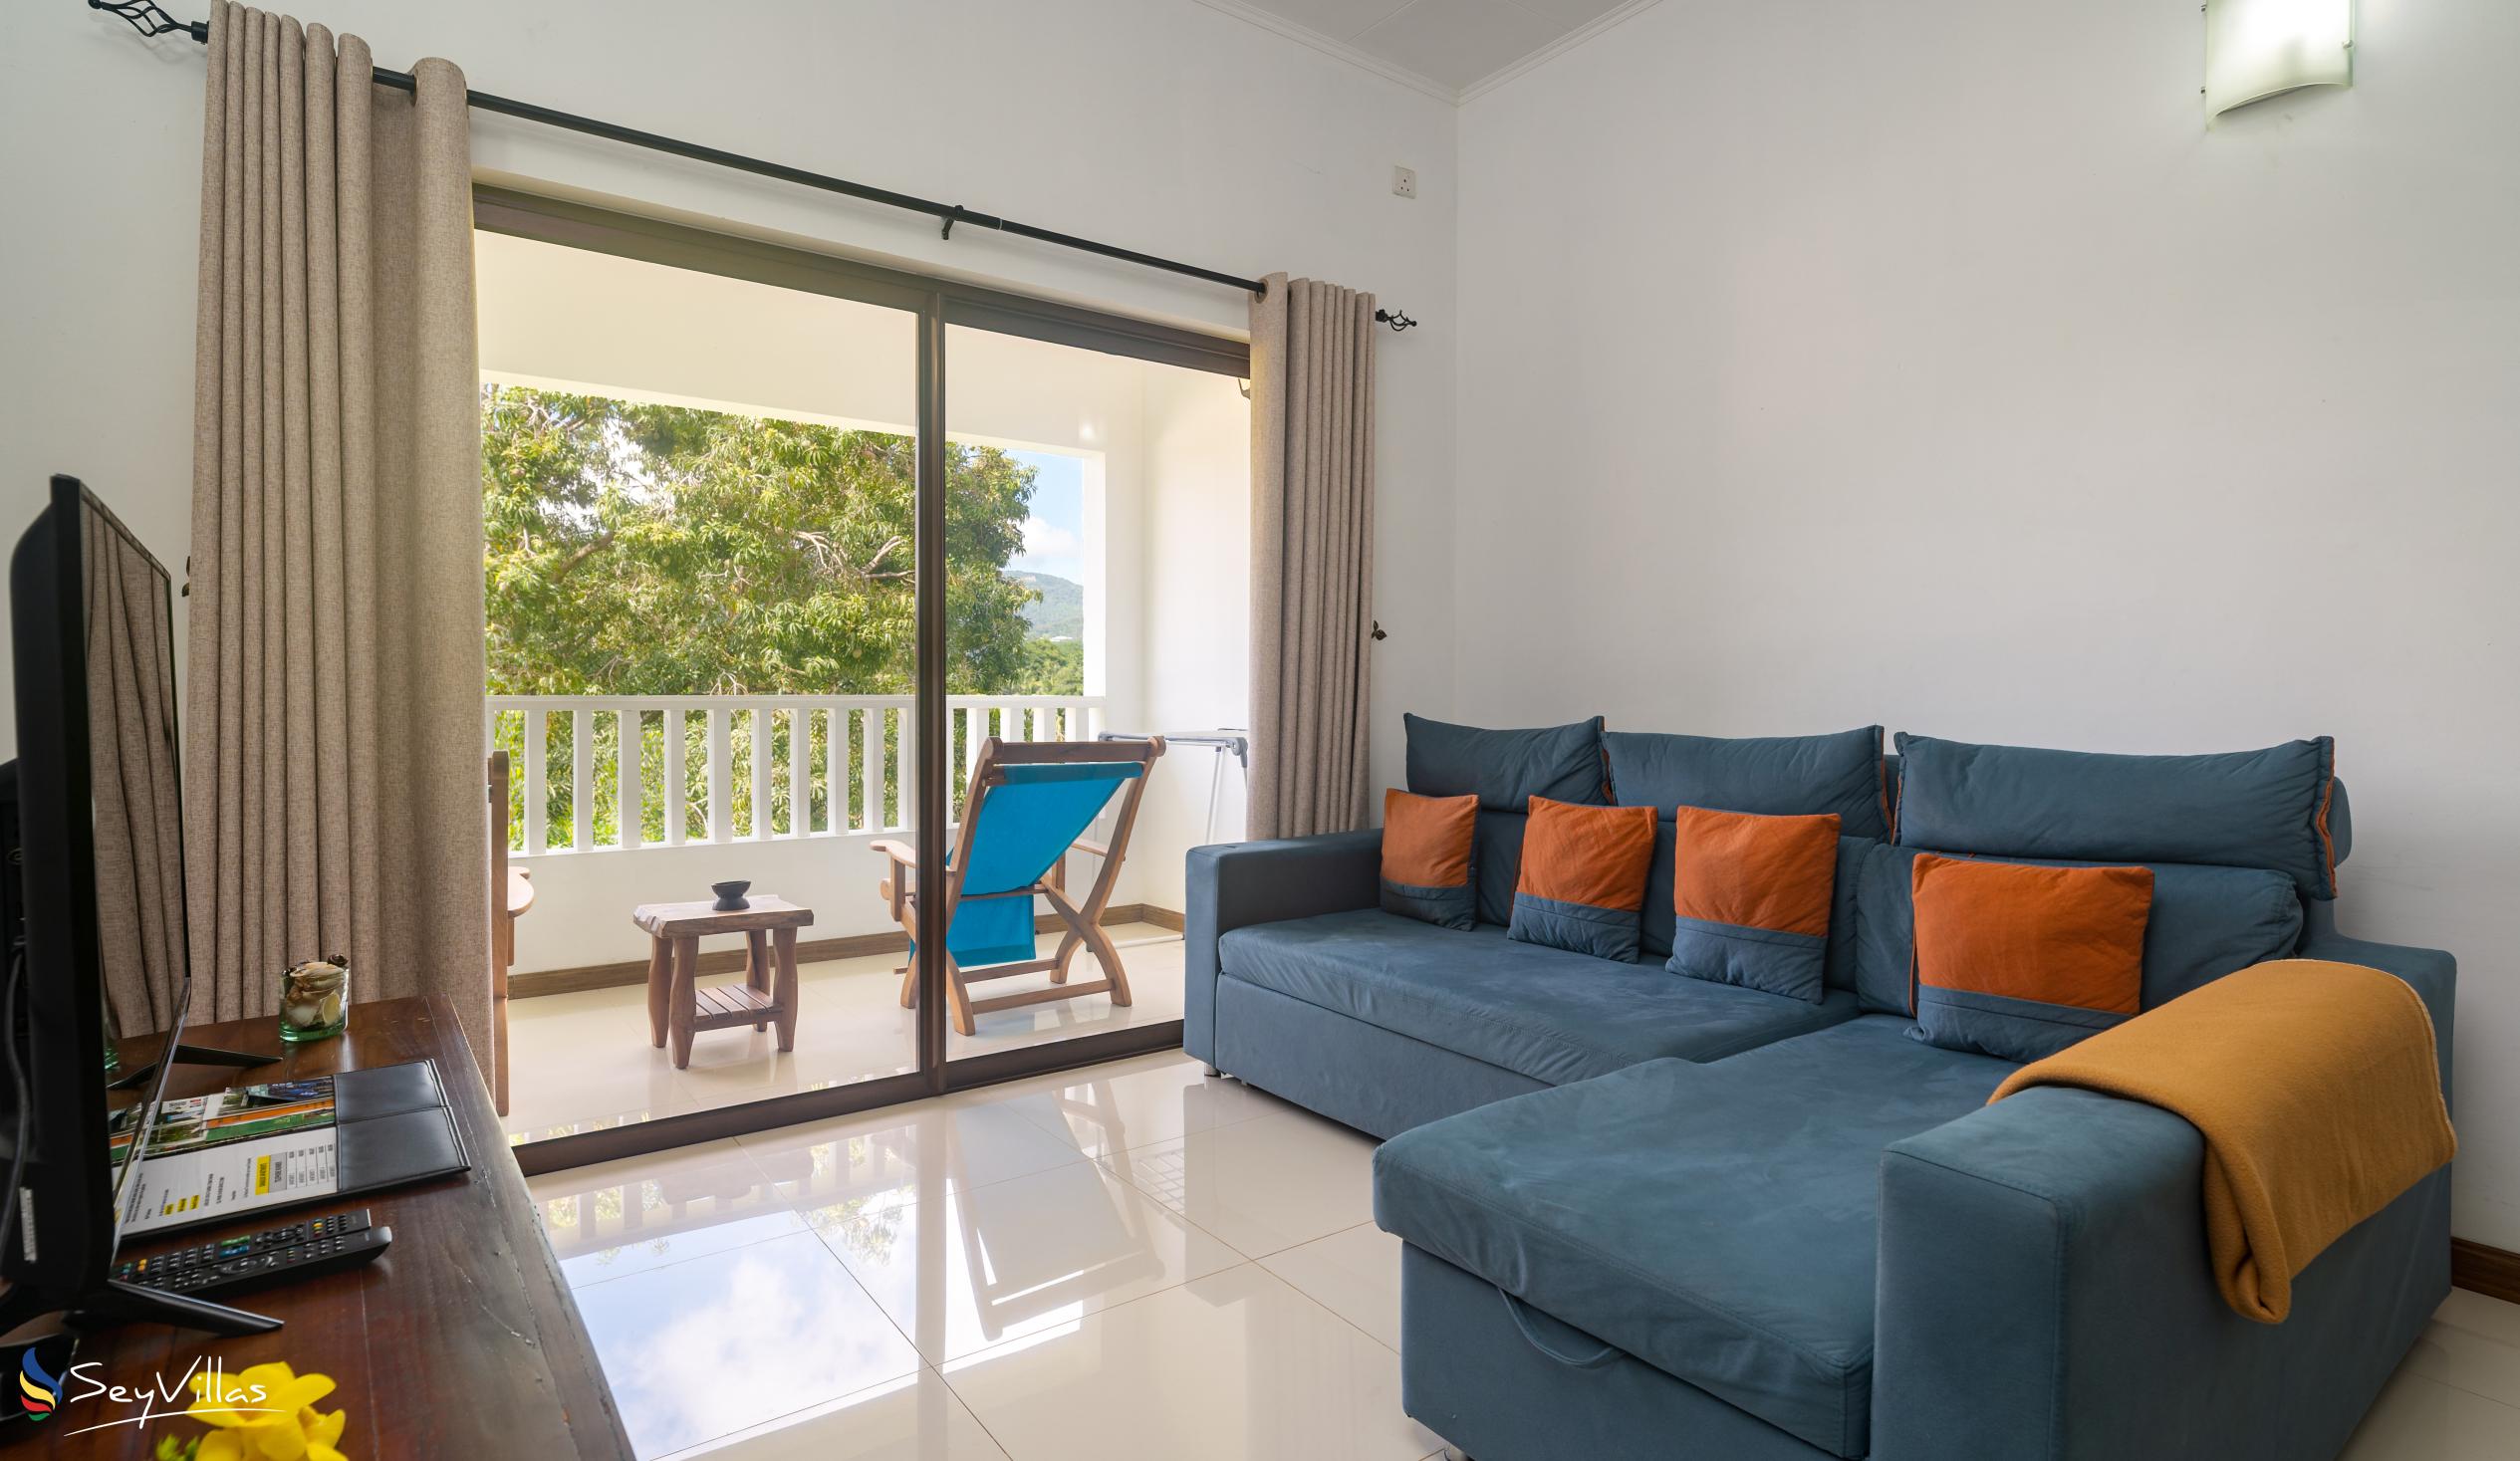 Photo 61: Kanasuk Self Catering Apartments - 1-Bedroom Apartment Tamarin - Mahé (Seychelles)